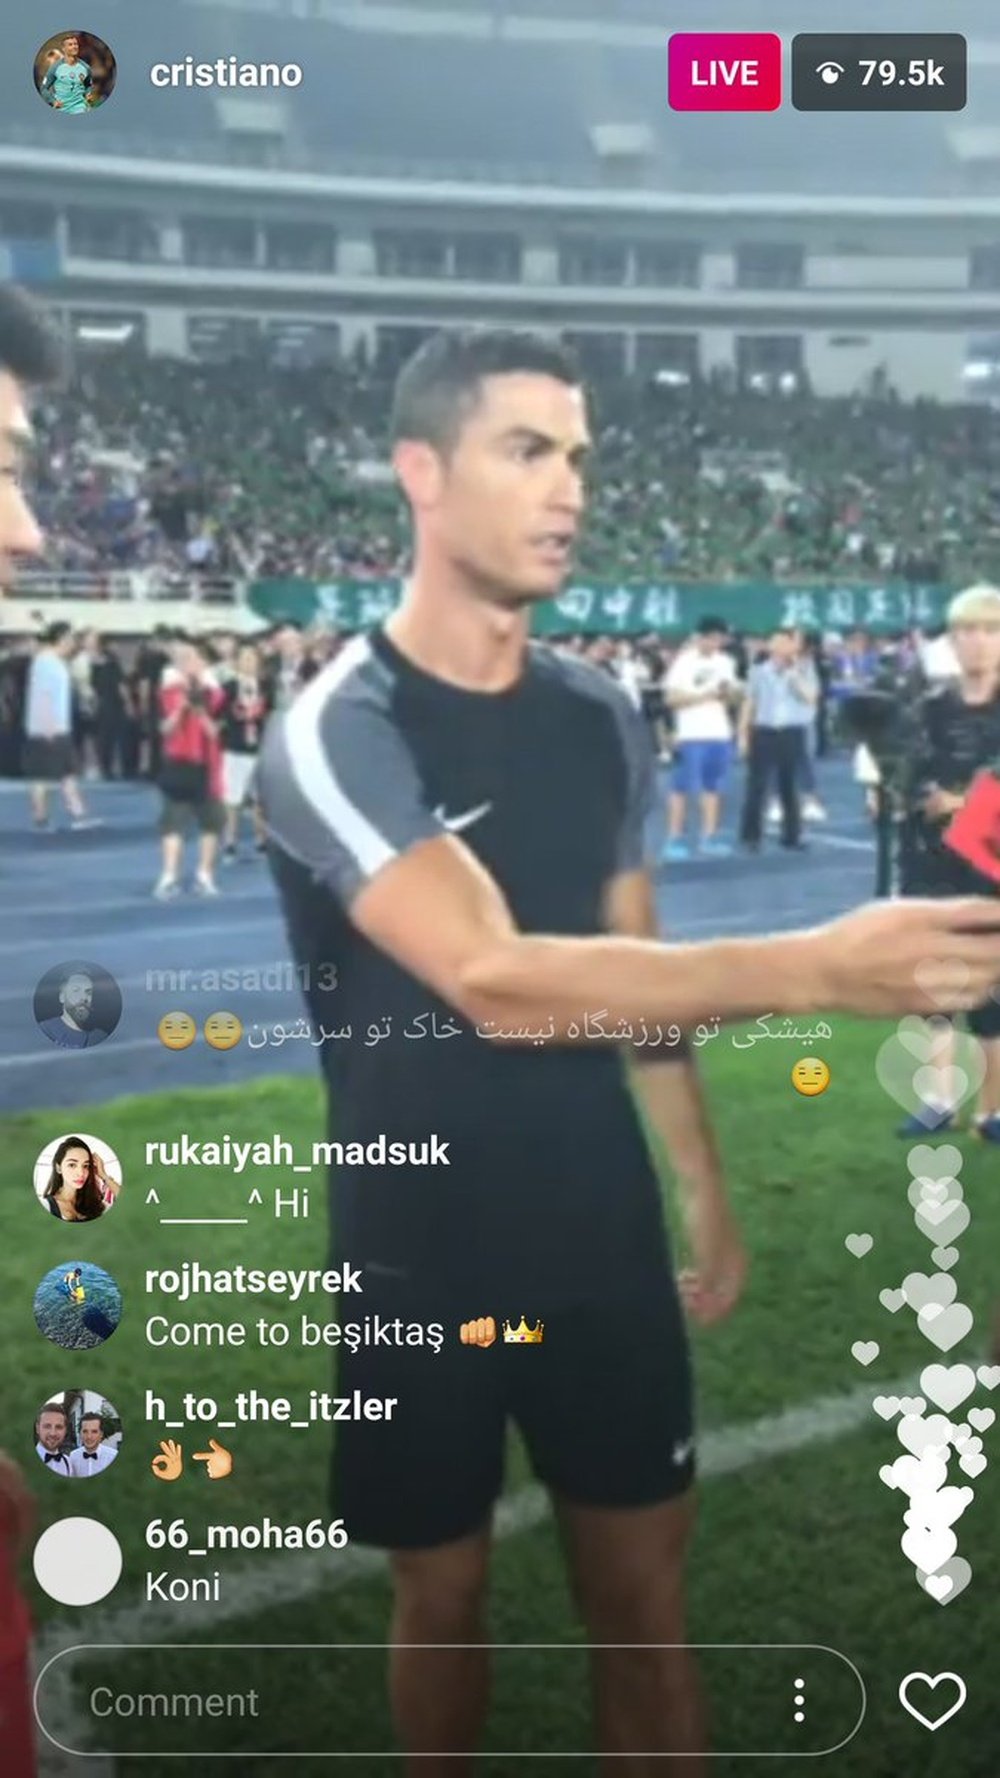 Cristiano hizo un Live en Instagram con diferentes retos a pie de campo. Cristiano/Captura